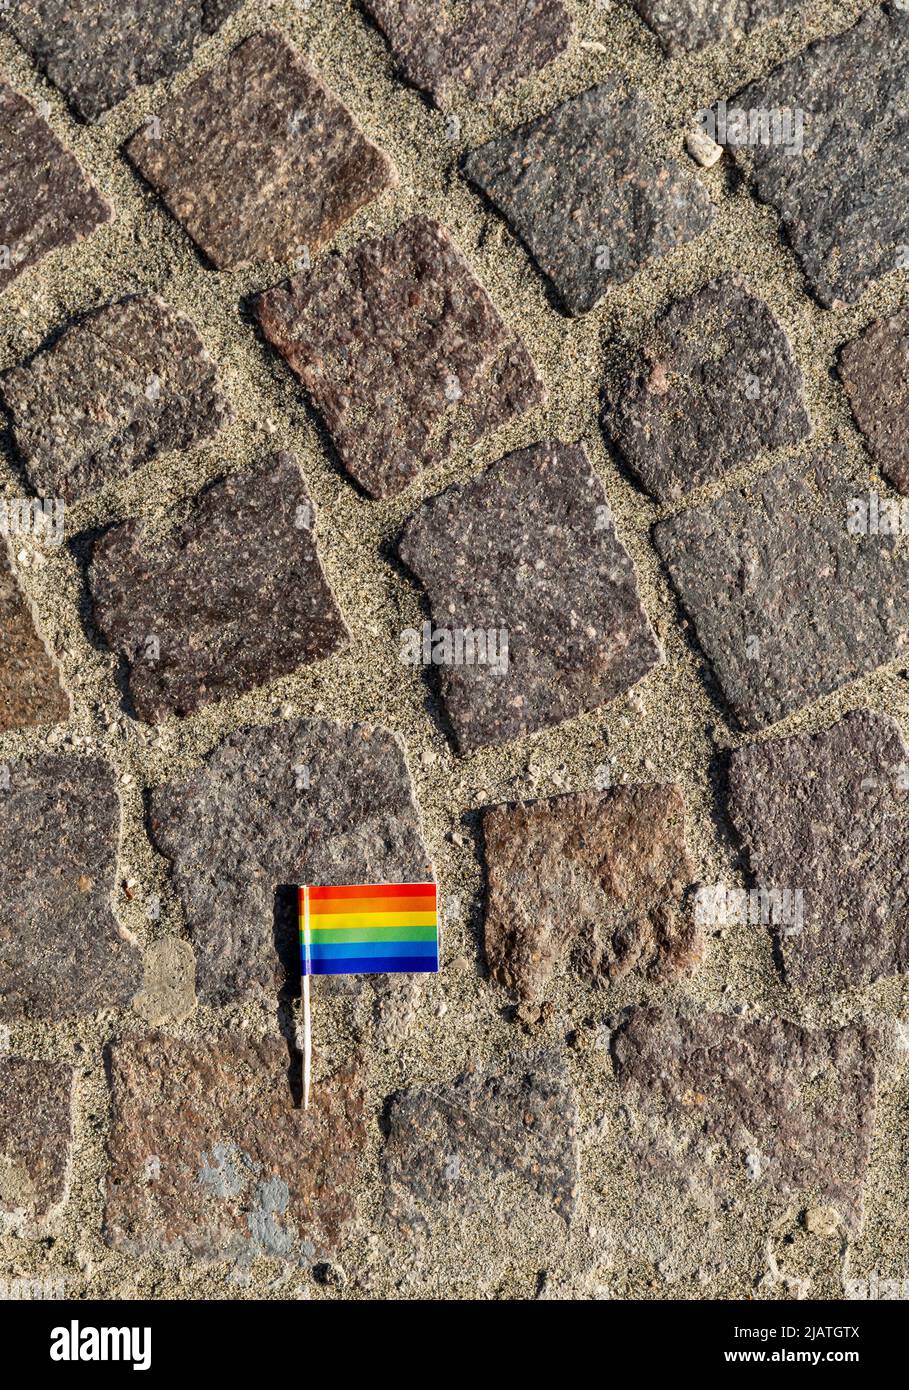 Toothpick rainbow flag on cobblestone pavement. Gay pride symbol. Copy space. Stock Photo